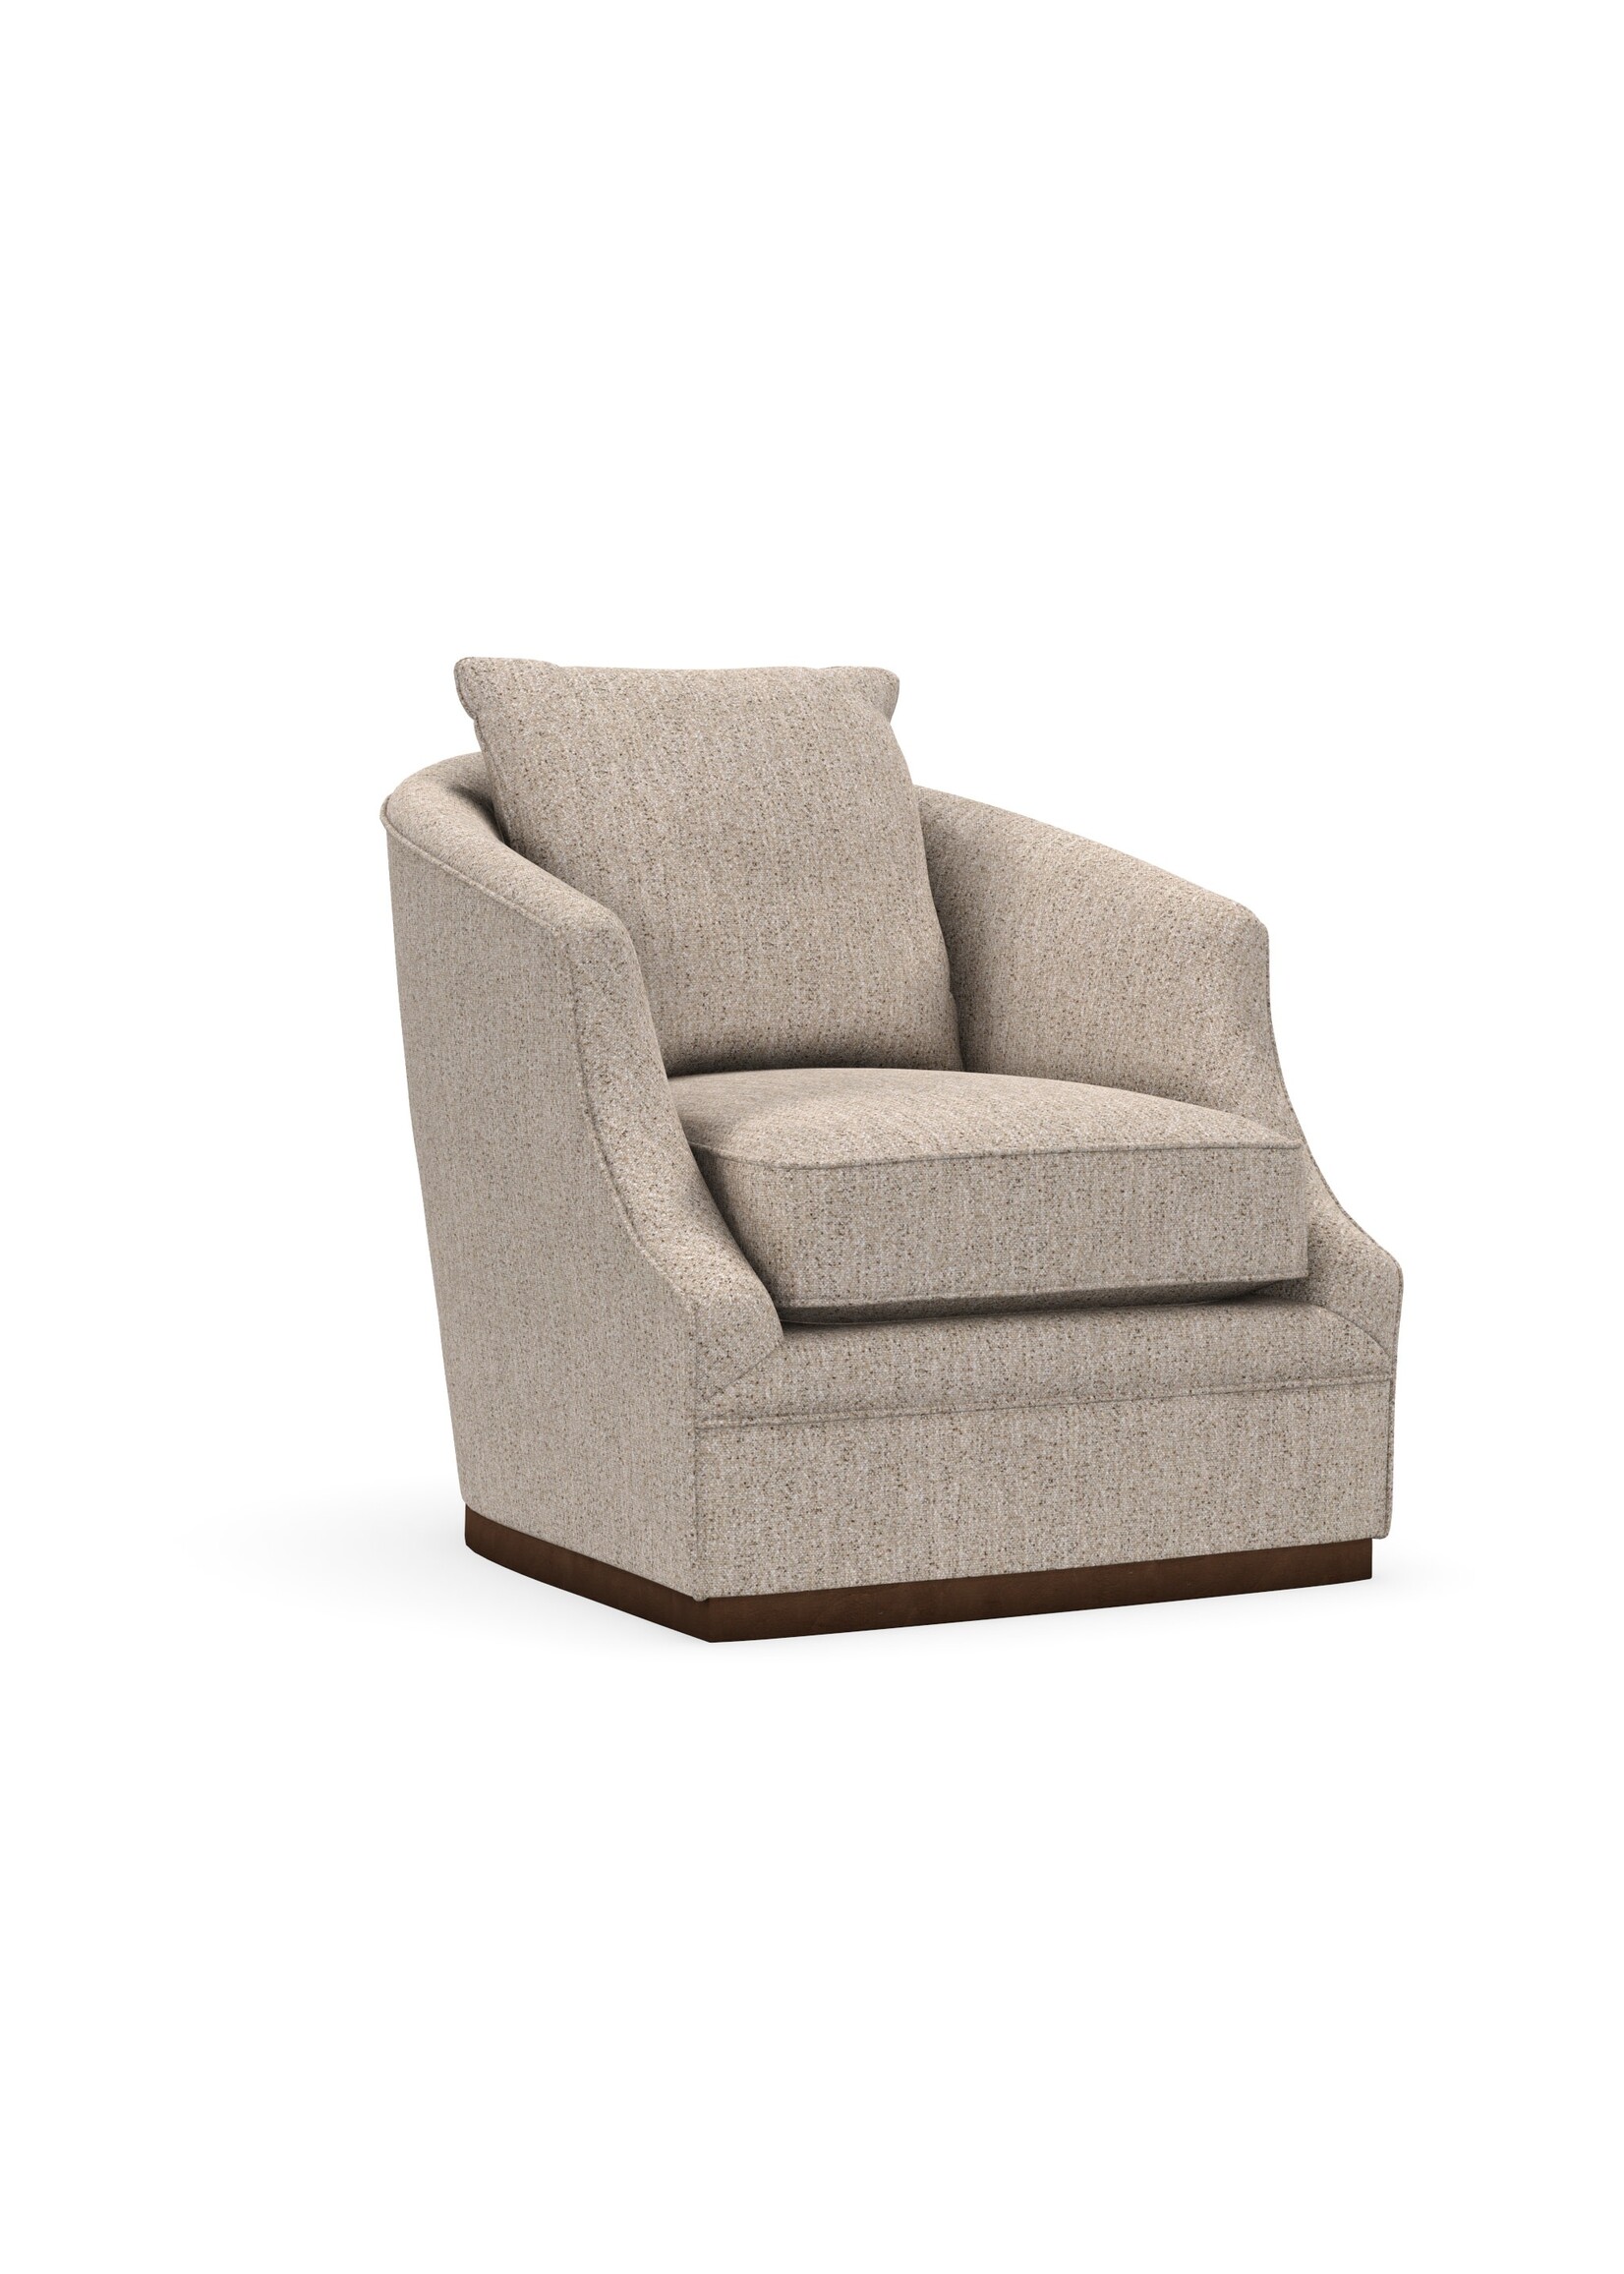 Emmerson Swivel Chair-40877-94-Latte-HH- L 31.0" x W 37.0" x H 35.0"